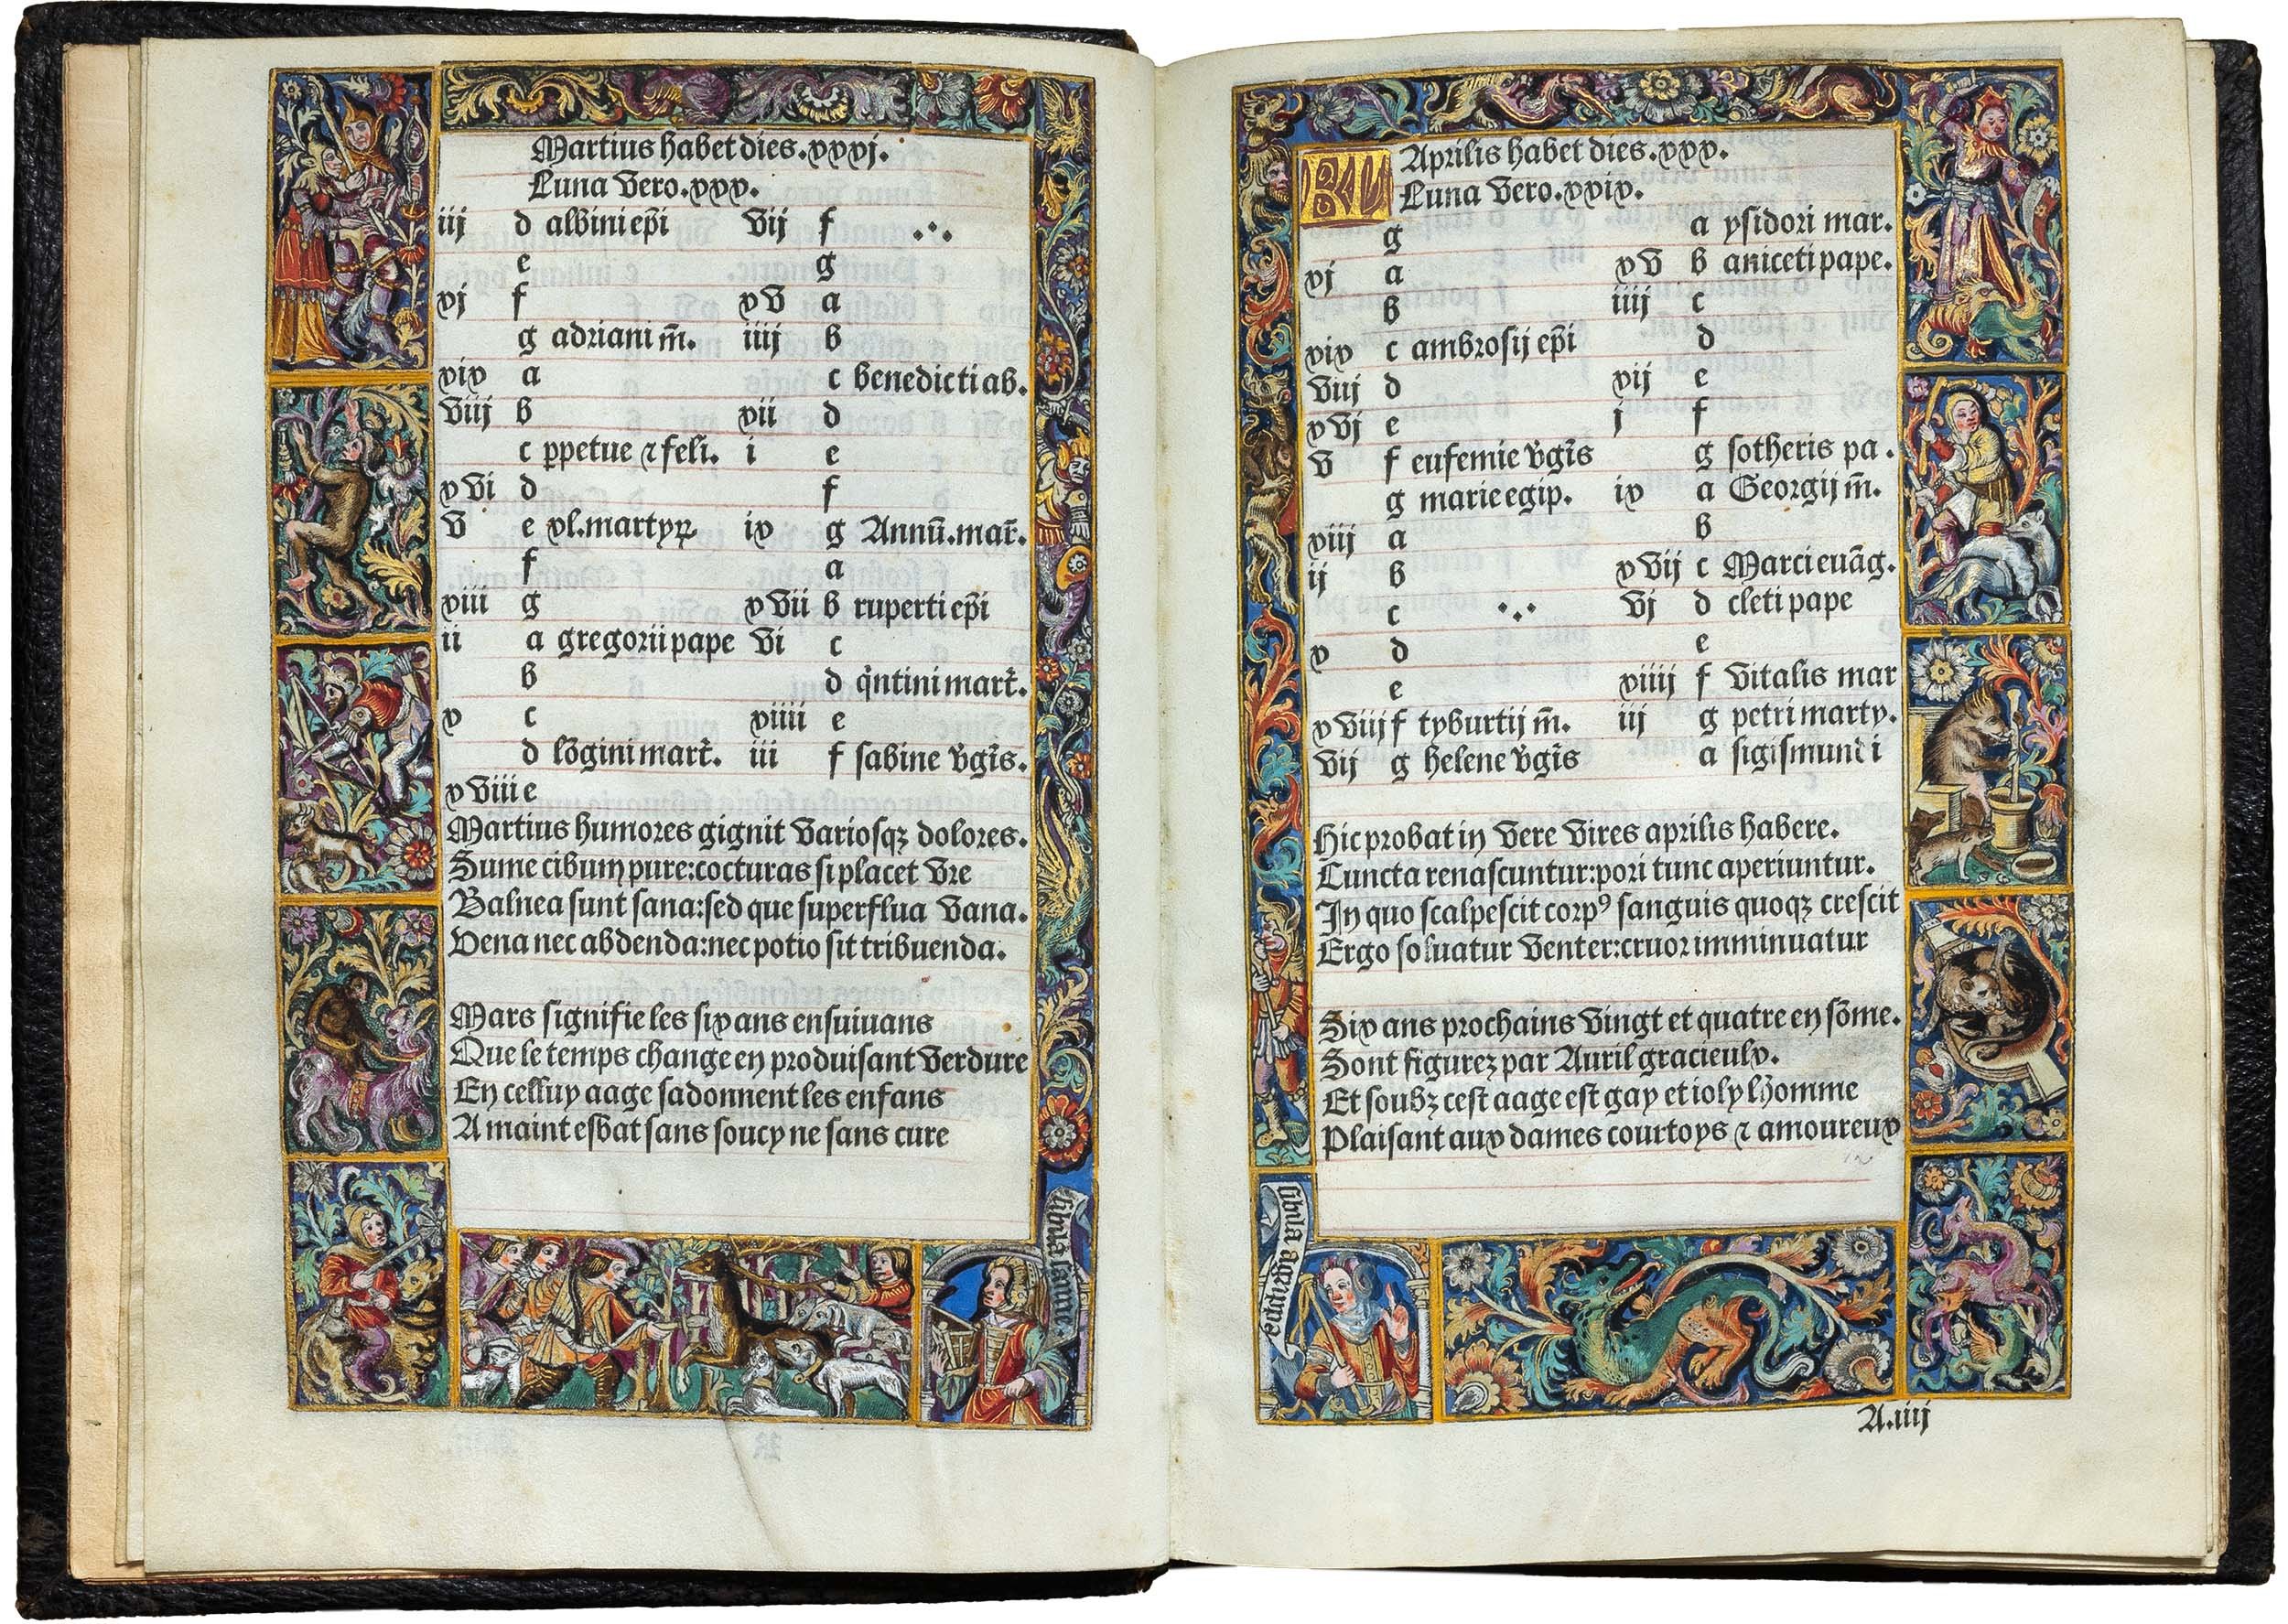 Printed-Book-of-Hours-10-january-1503-horae-bmv-kerver-remacle-illuminated-vellum-copy-schönborn-buchheim-07.jpg